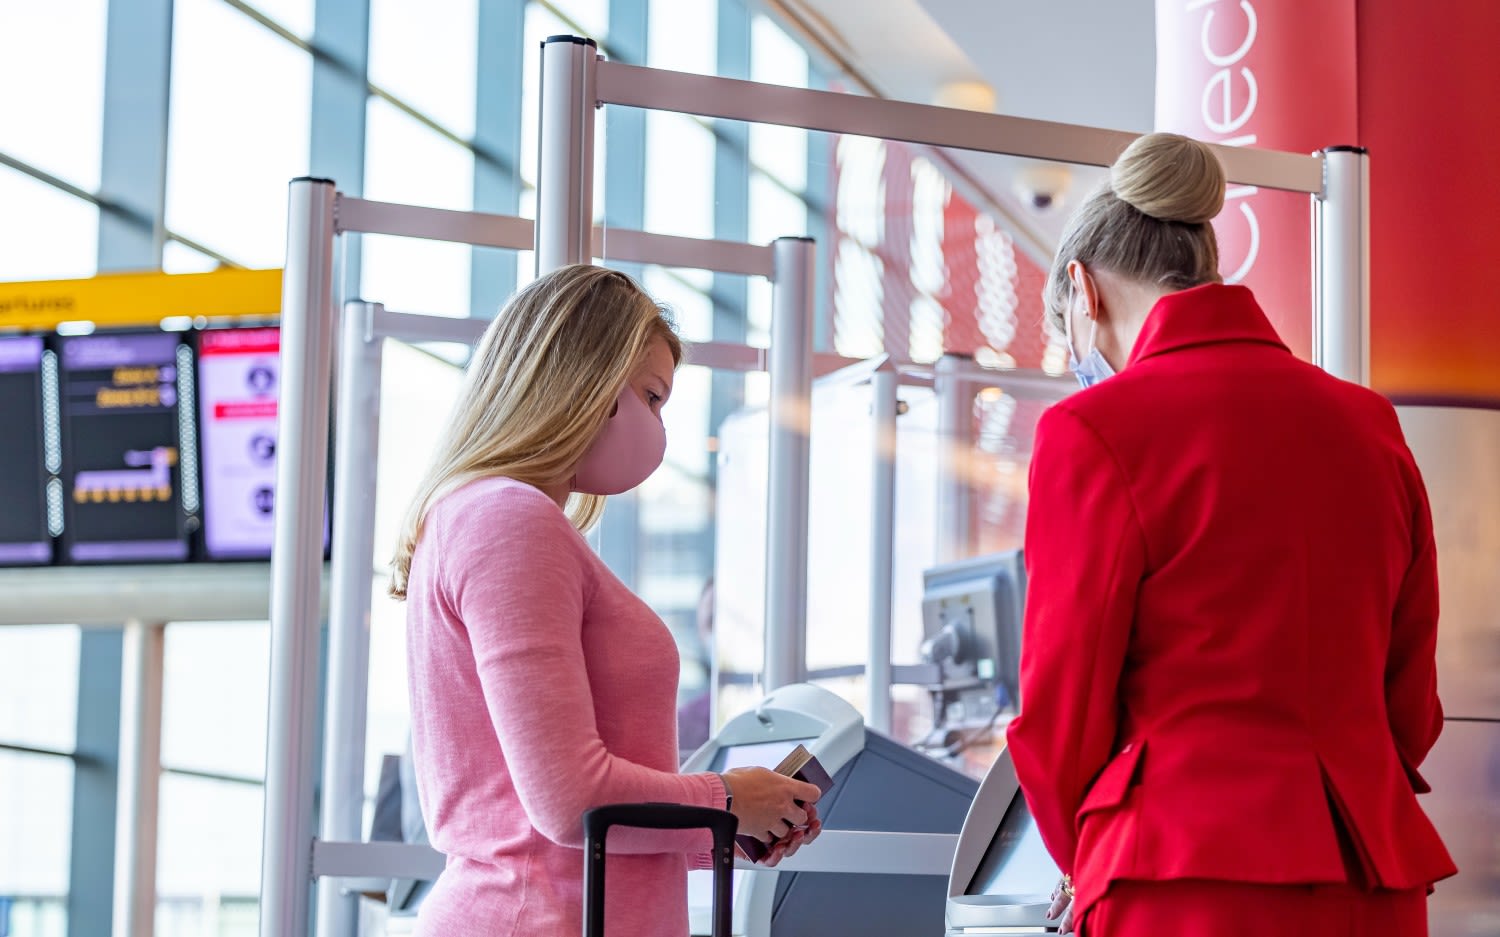 A Virgin Atlantic customer checking in at London Heathrow's Terminal 3